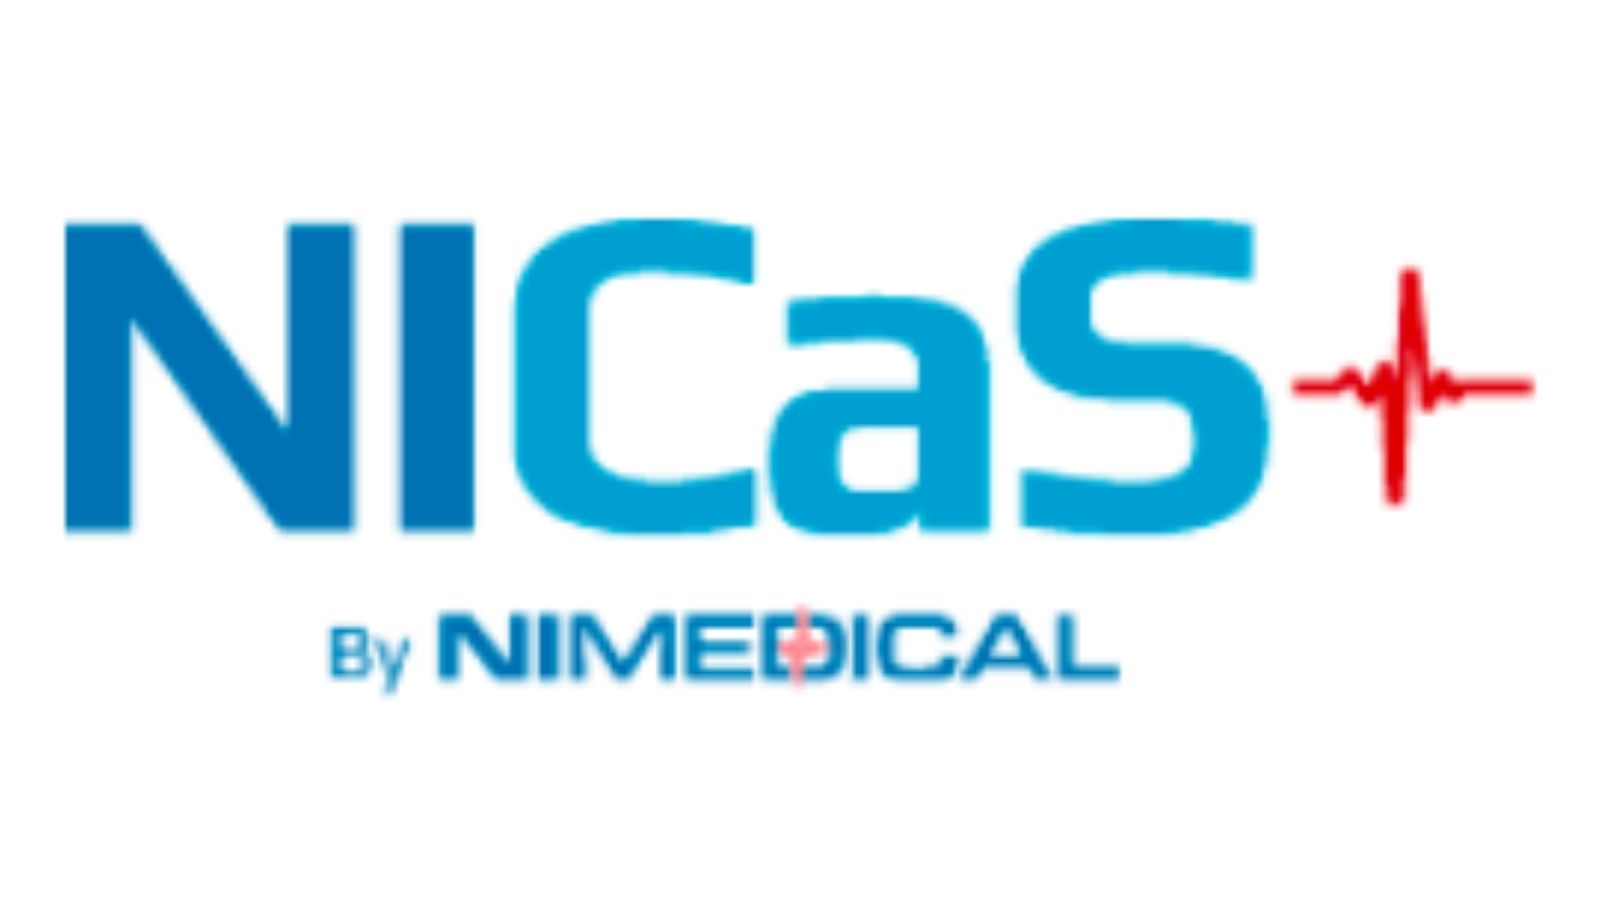 NI Medical——无创心脏系统（NICaS）和血液动力学导航仪